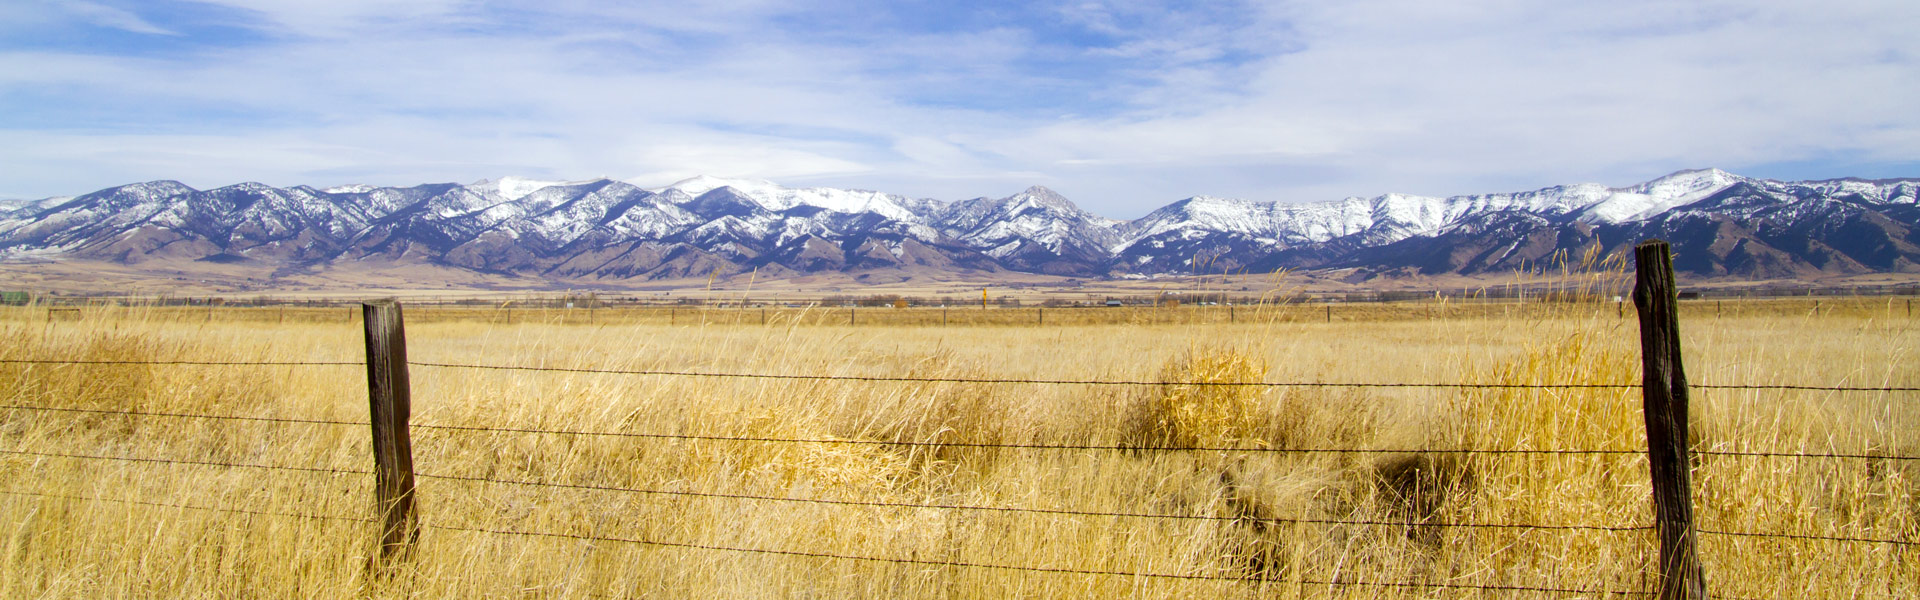 Fence against winter Montana landscape